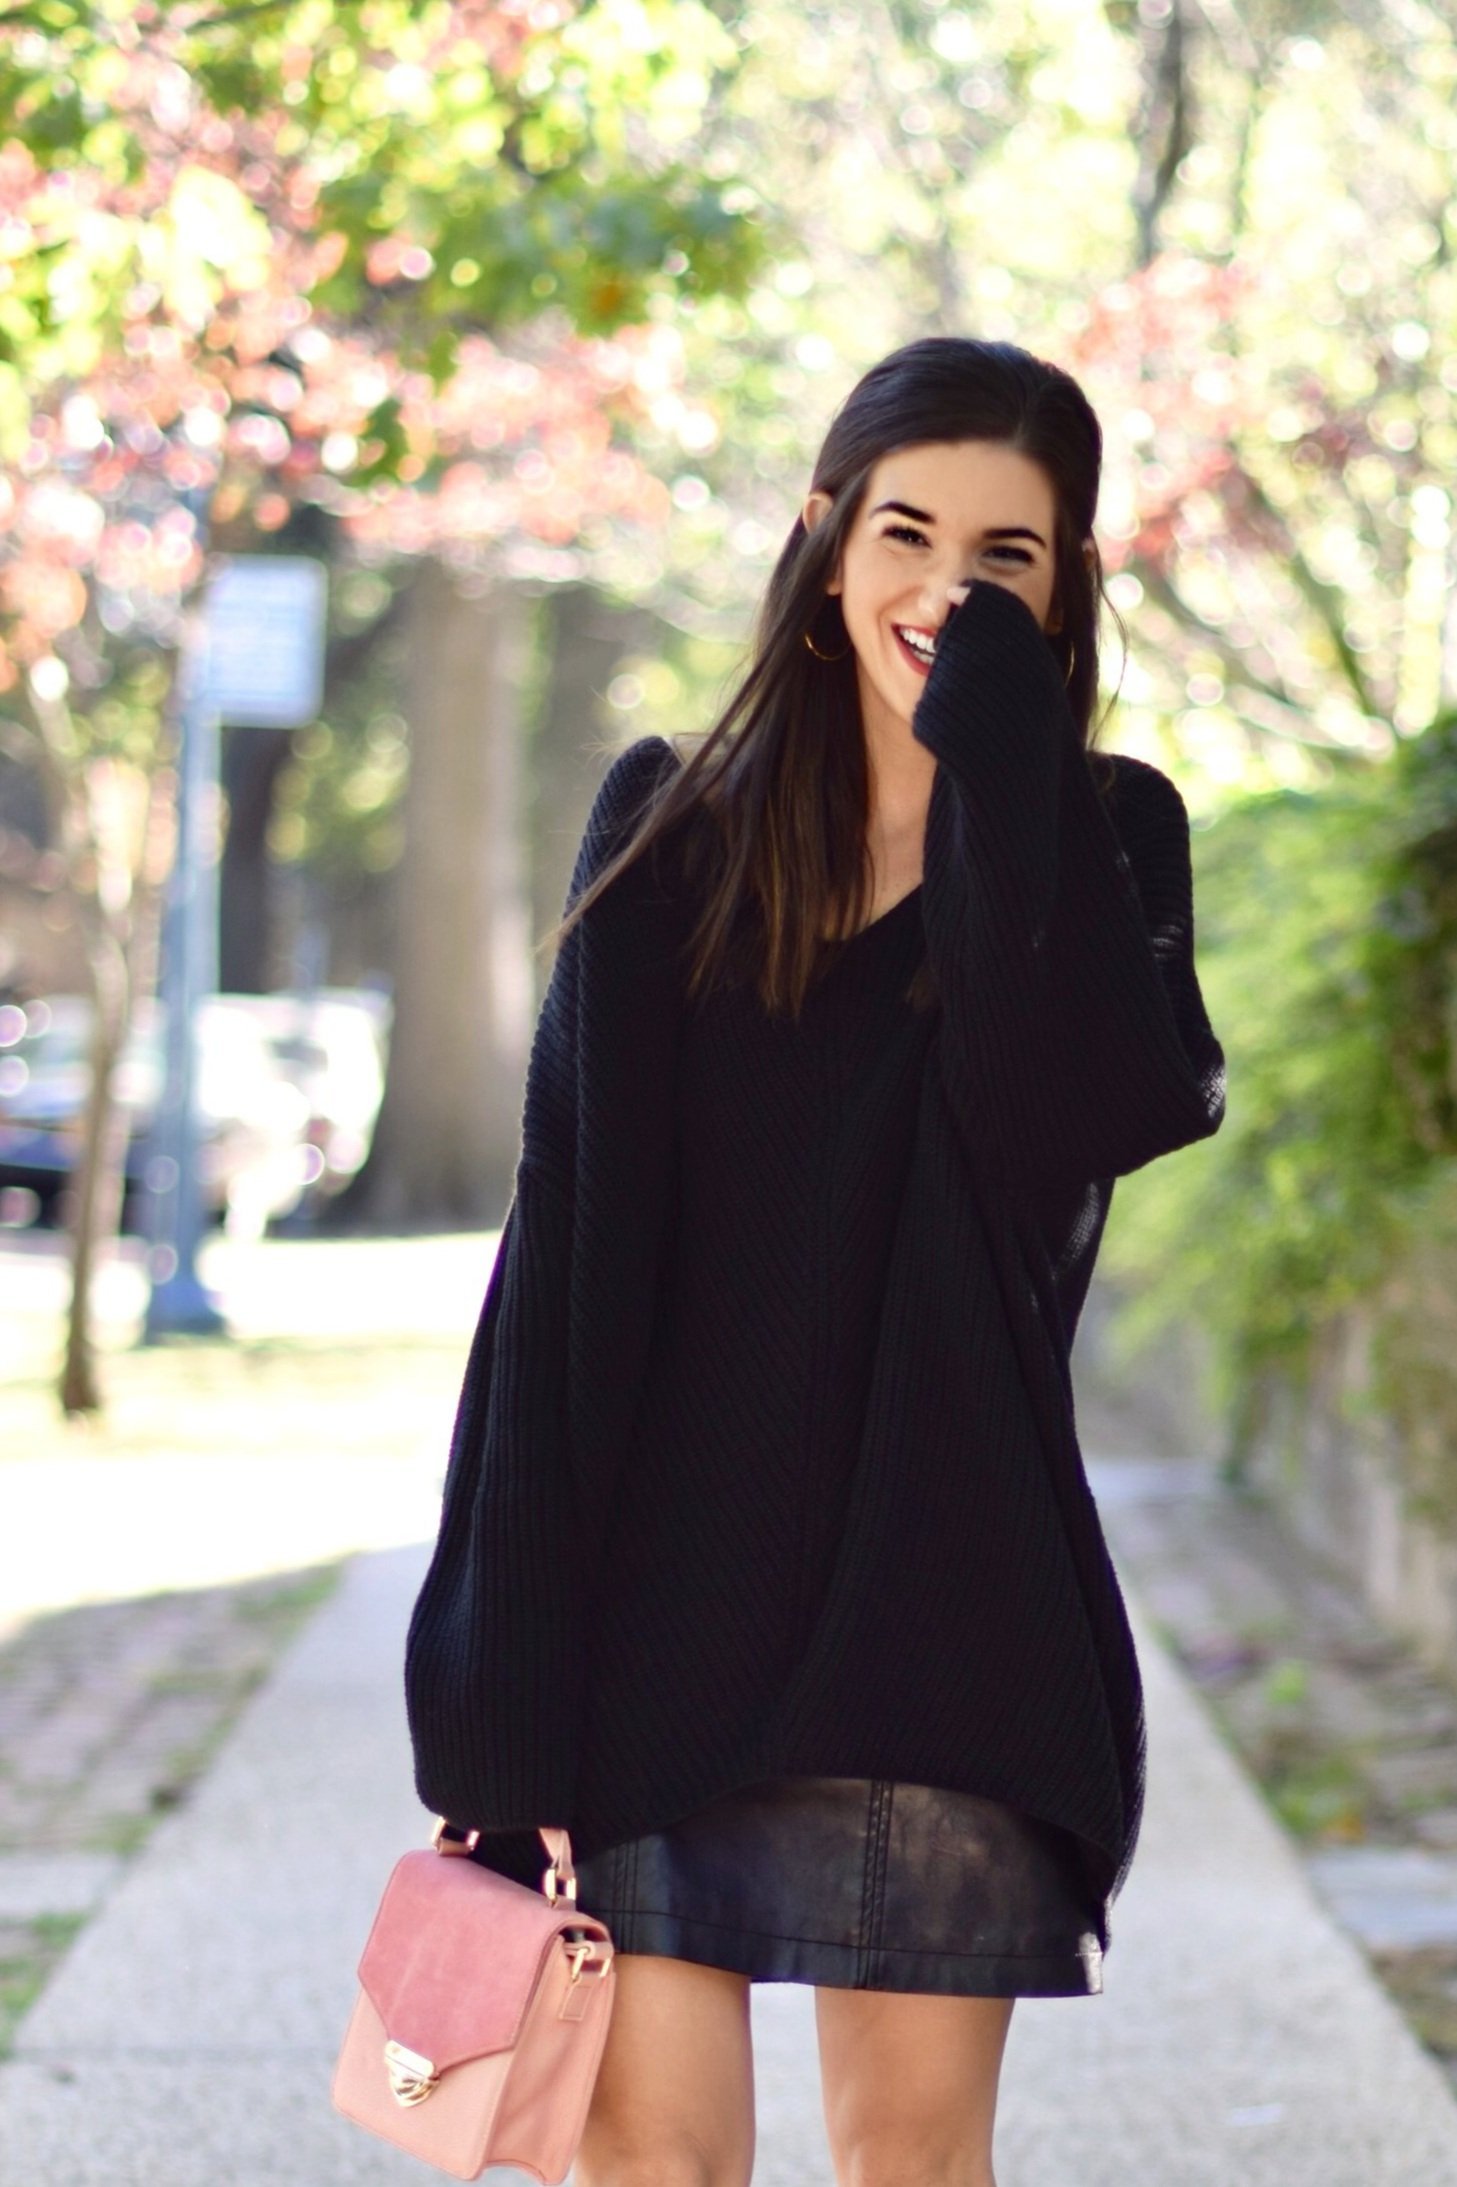 Motion Oversized Sweater - Black - Ryderwear